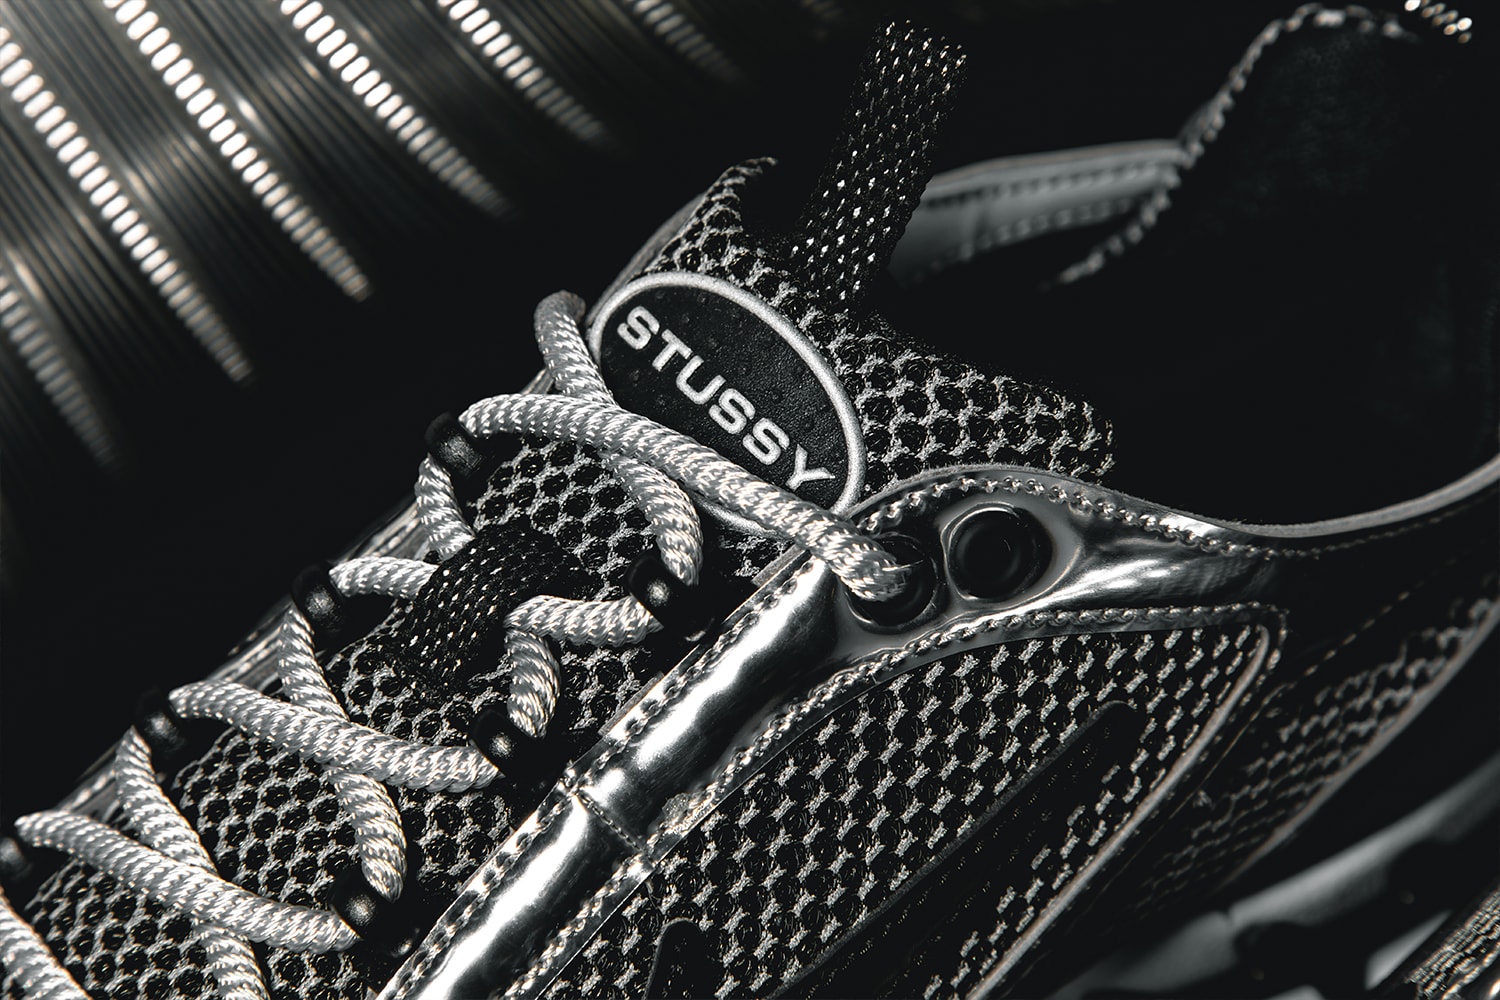 Stüssy Nike Air Zoom Spiridon Cage 2 Closer Look CU1854-001 CQ5486-200 Pure Platinum Black White Black Fossil Apparel Release Info Buy Price Date